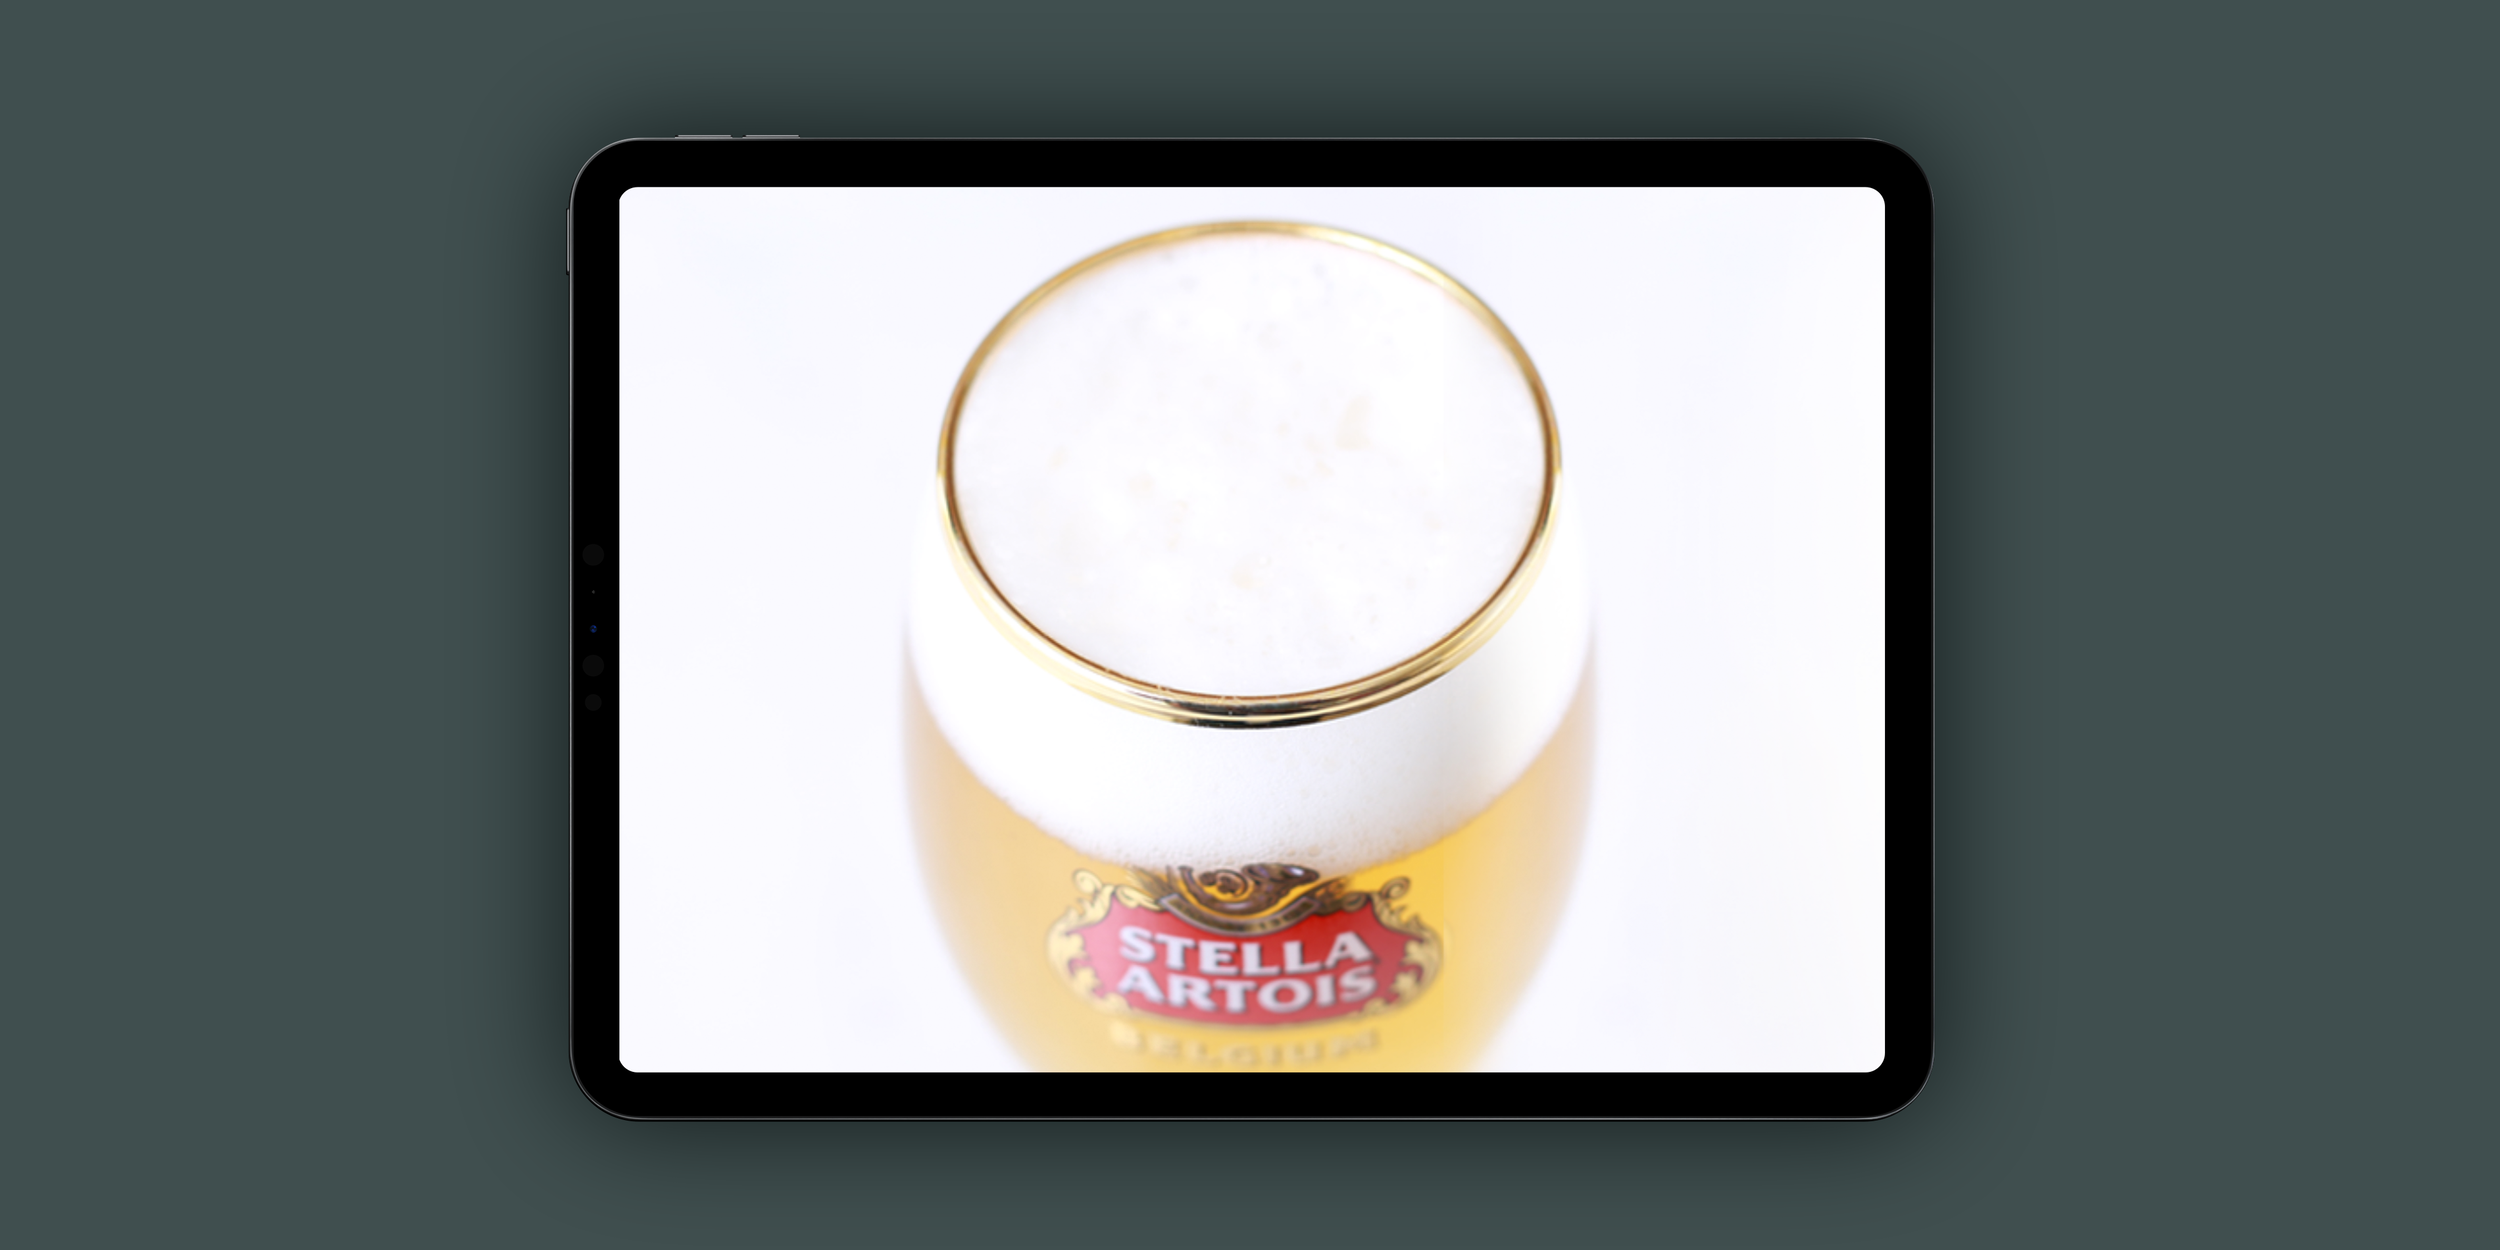 Stella-tablet-mockup.png